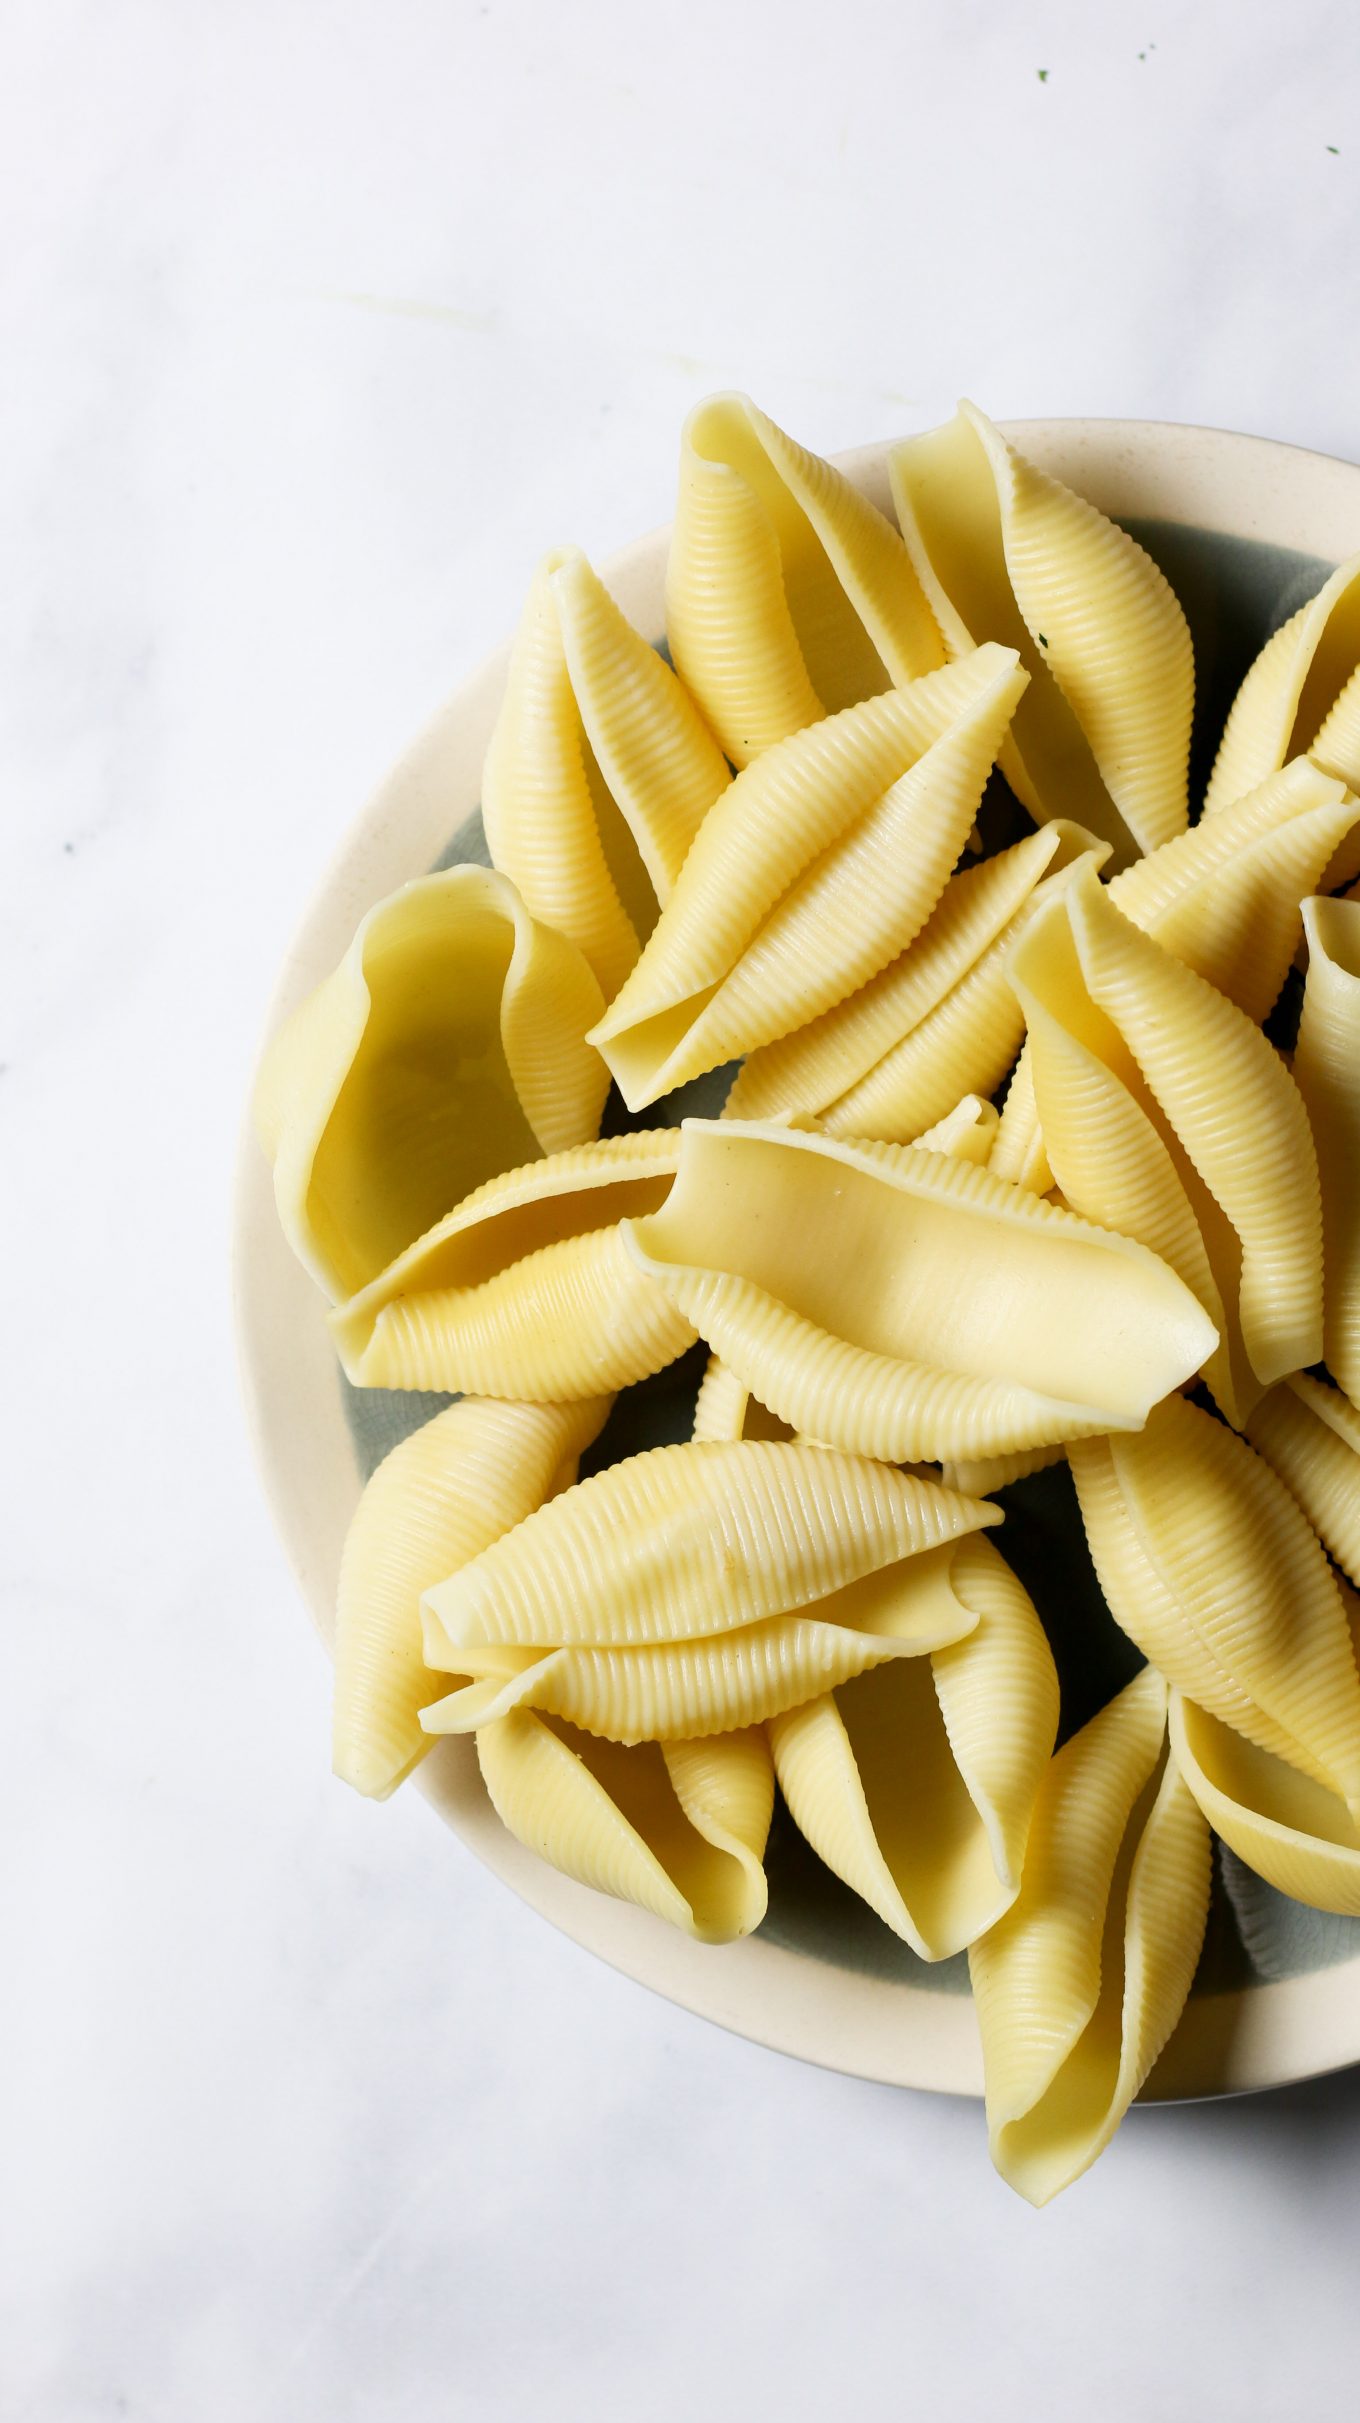 Jumbo pasta shells